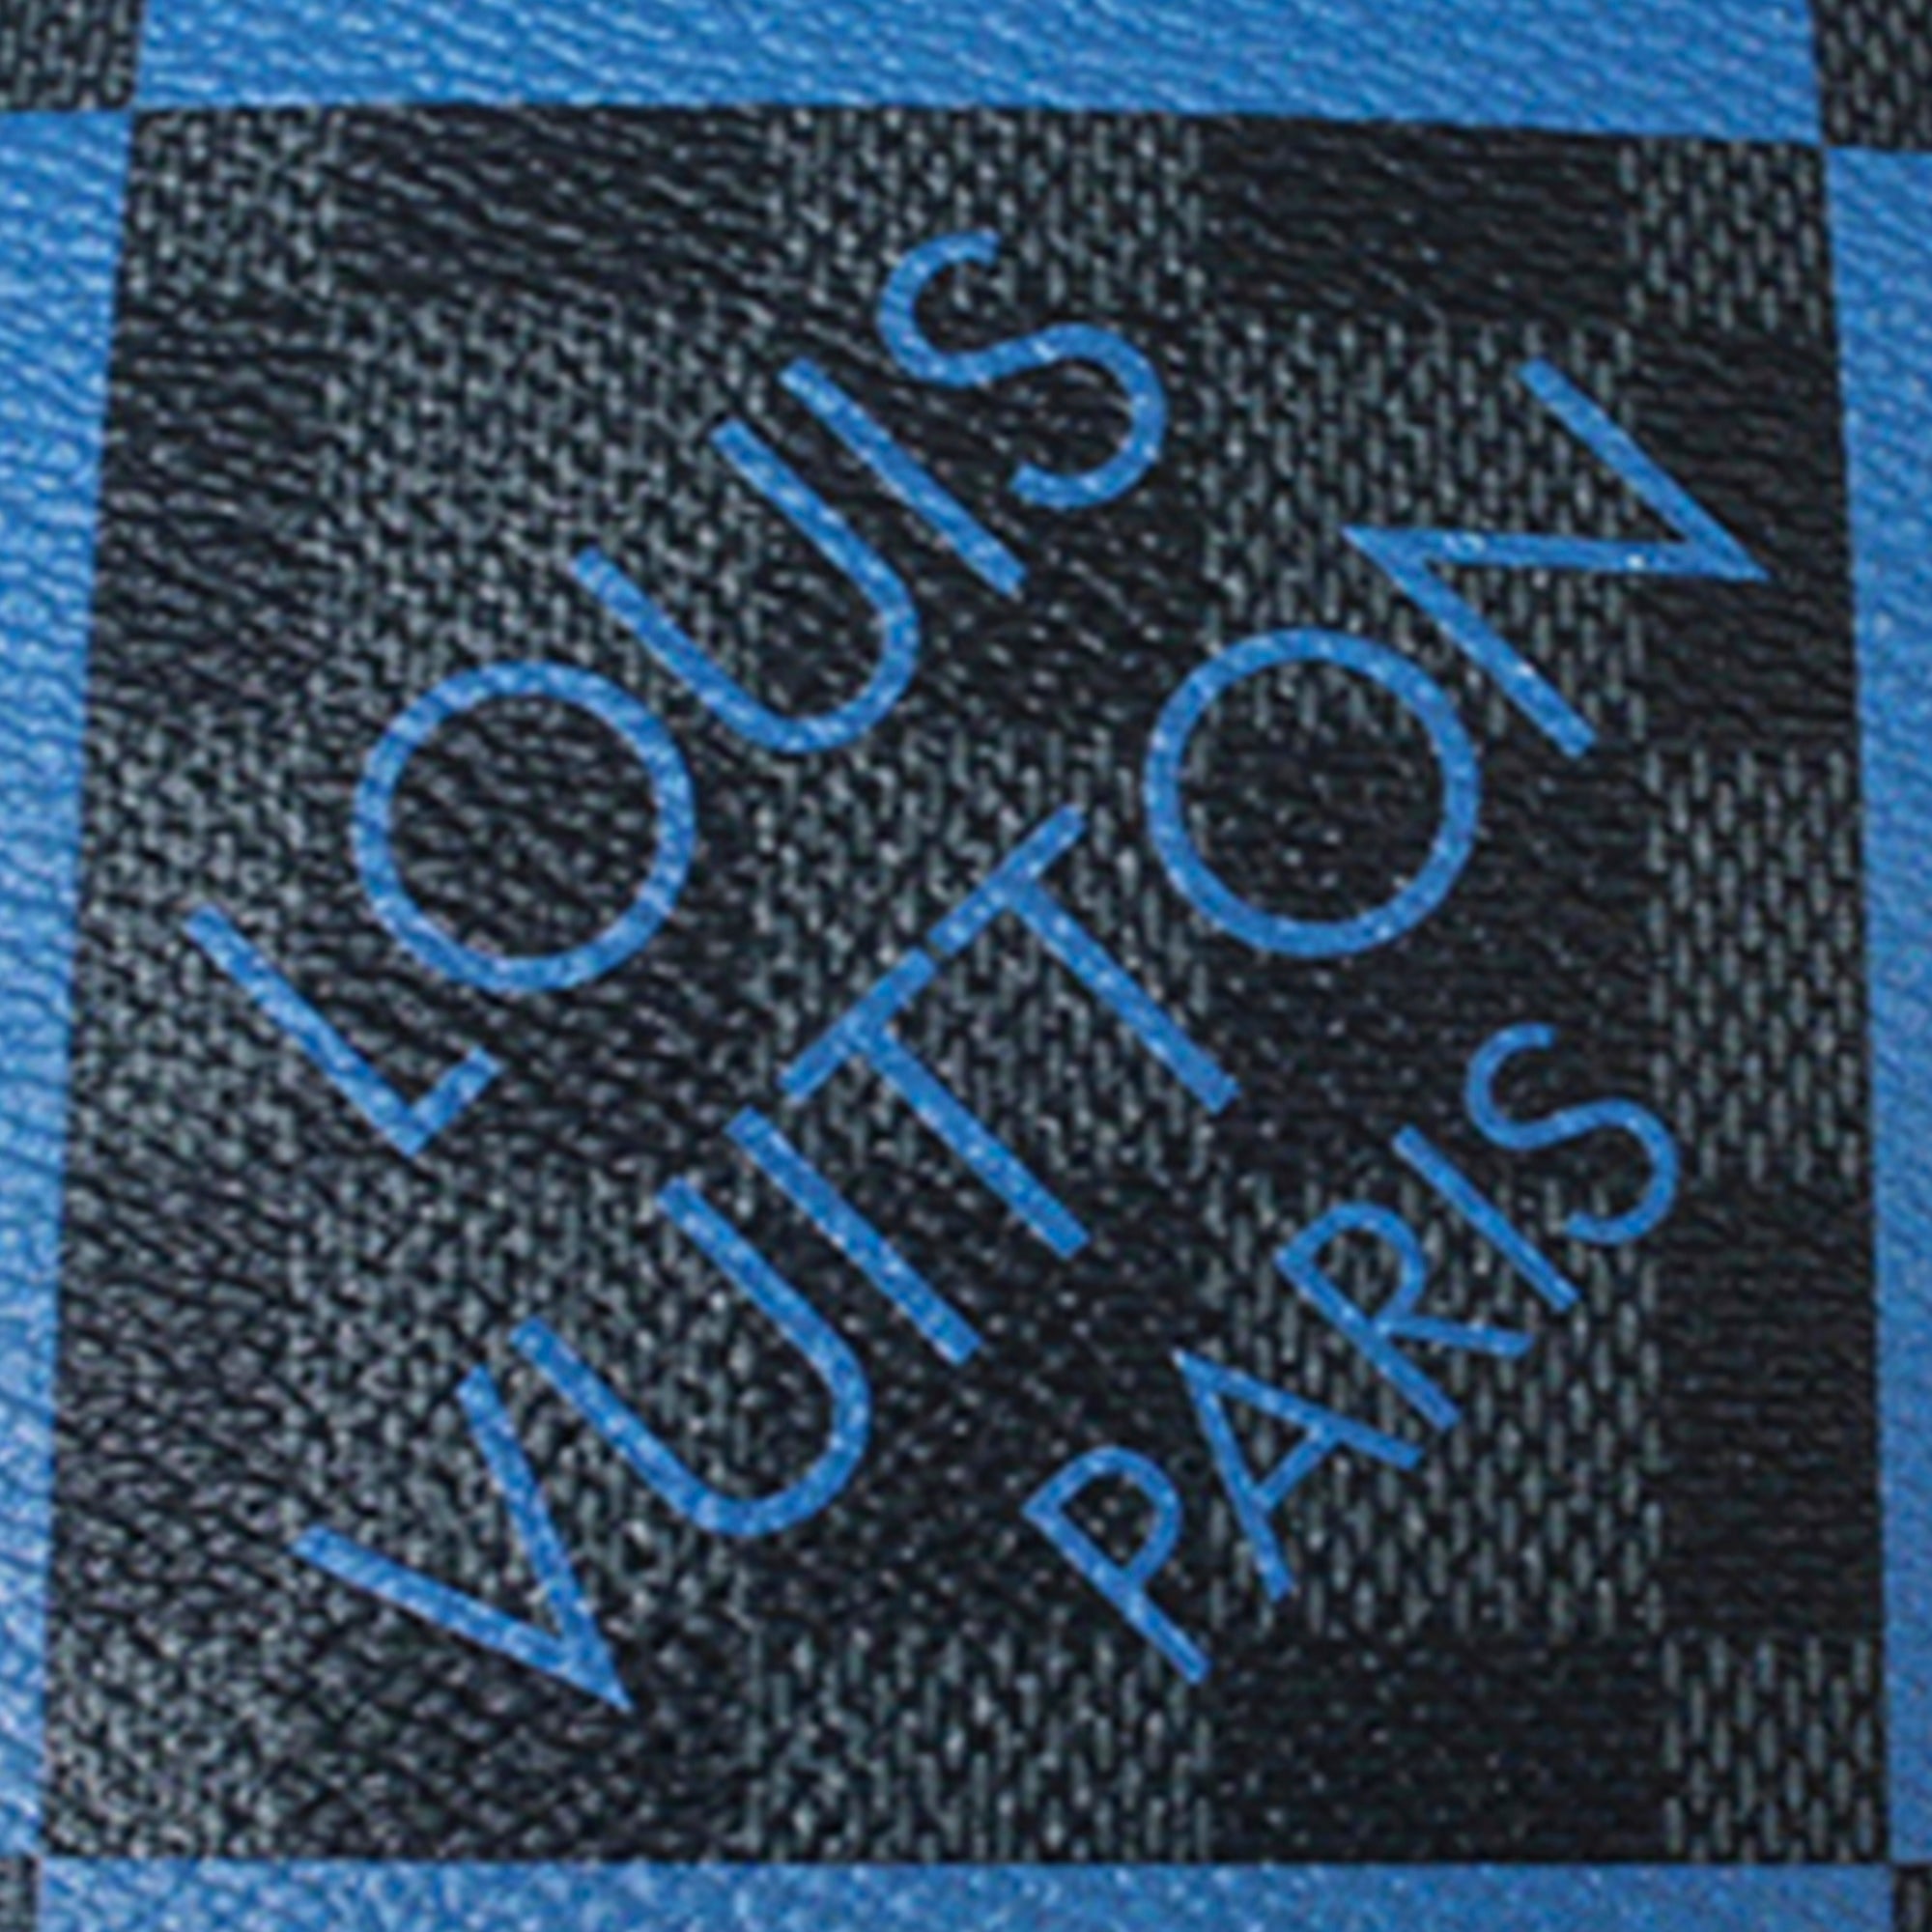 Louis Vuitton Josh Backpack Damier Graphite Giant Blue for Men